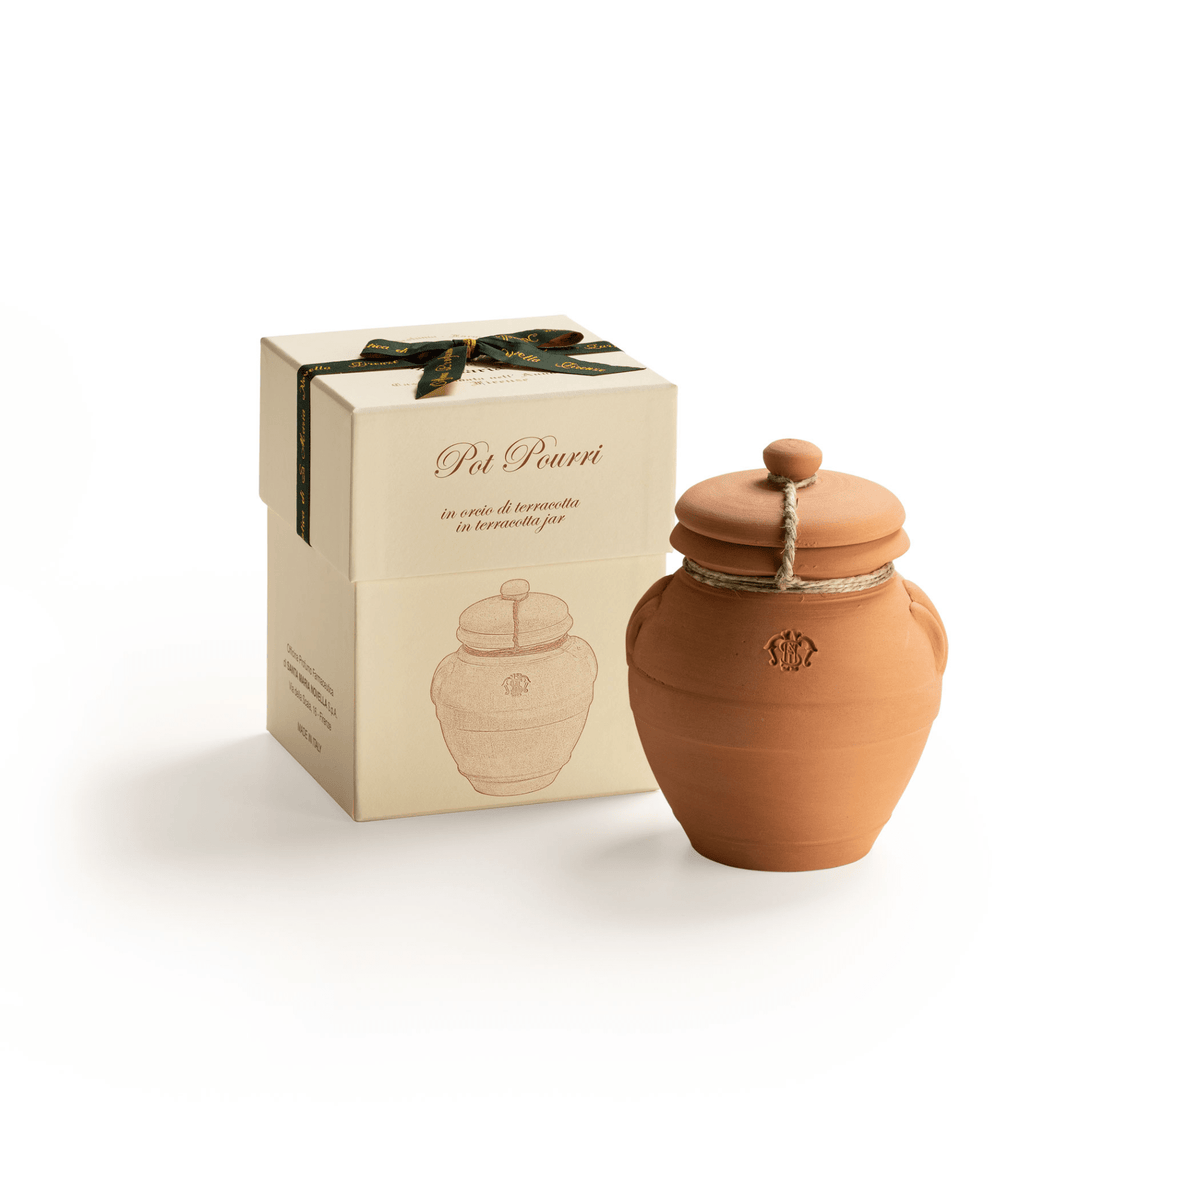 Primary Image of Pot Pourri in Terracotta Jar (Large)